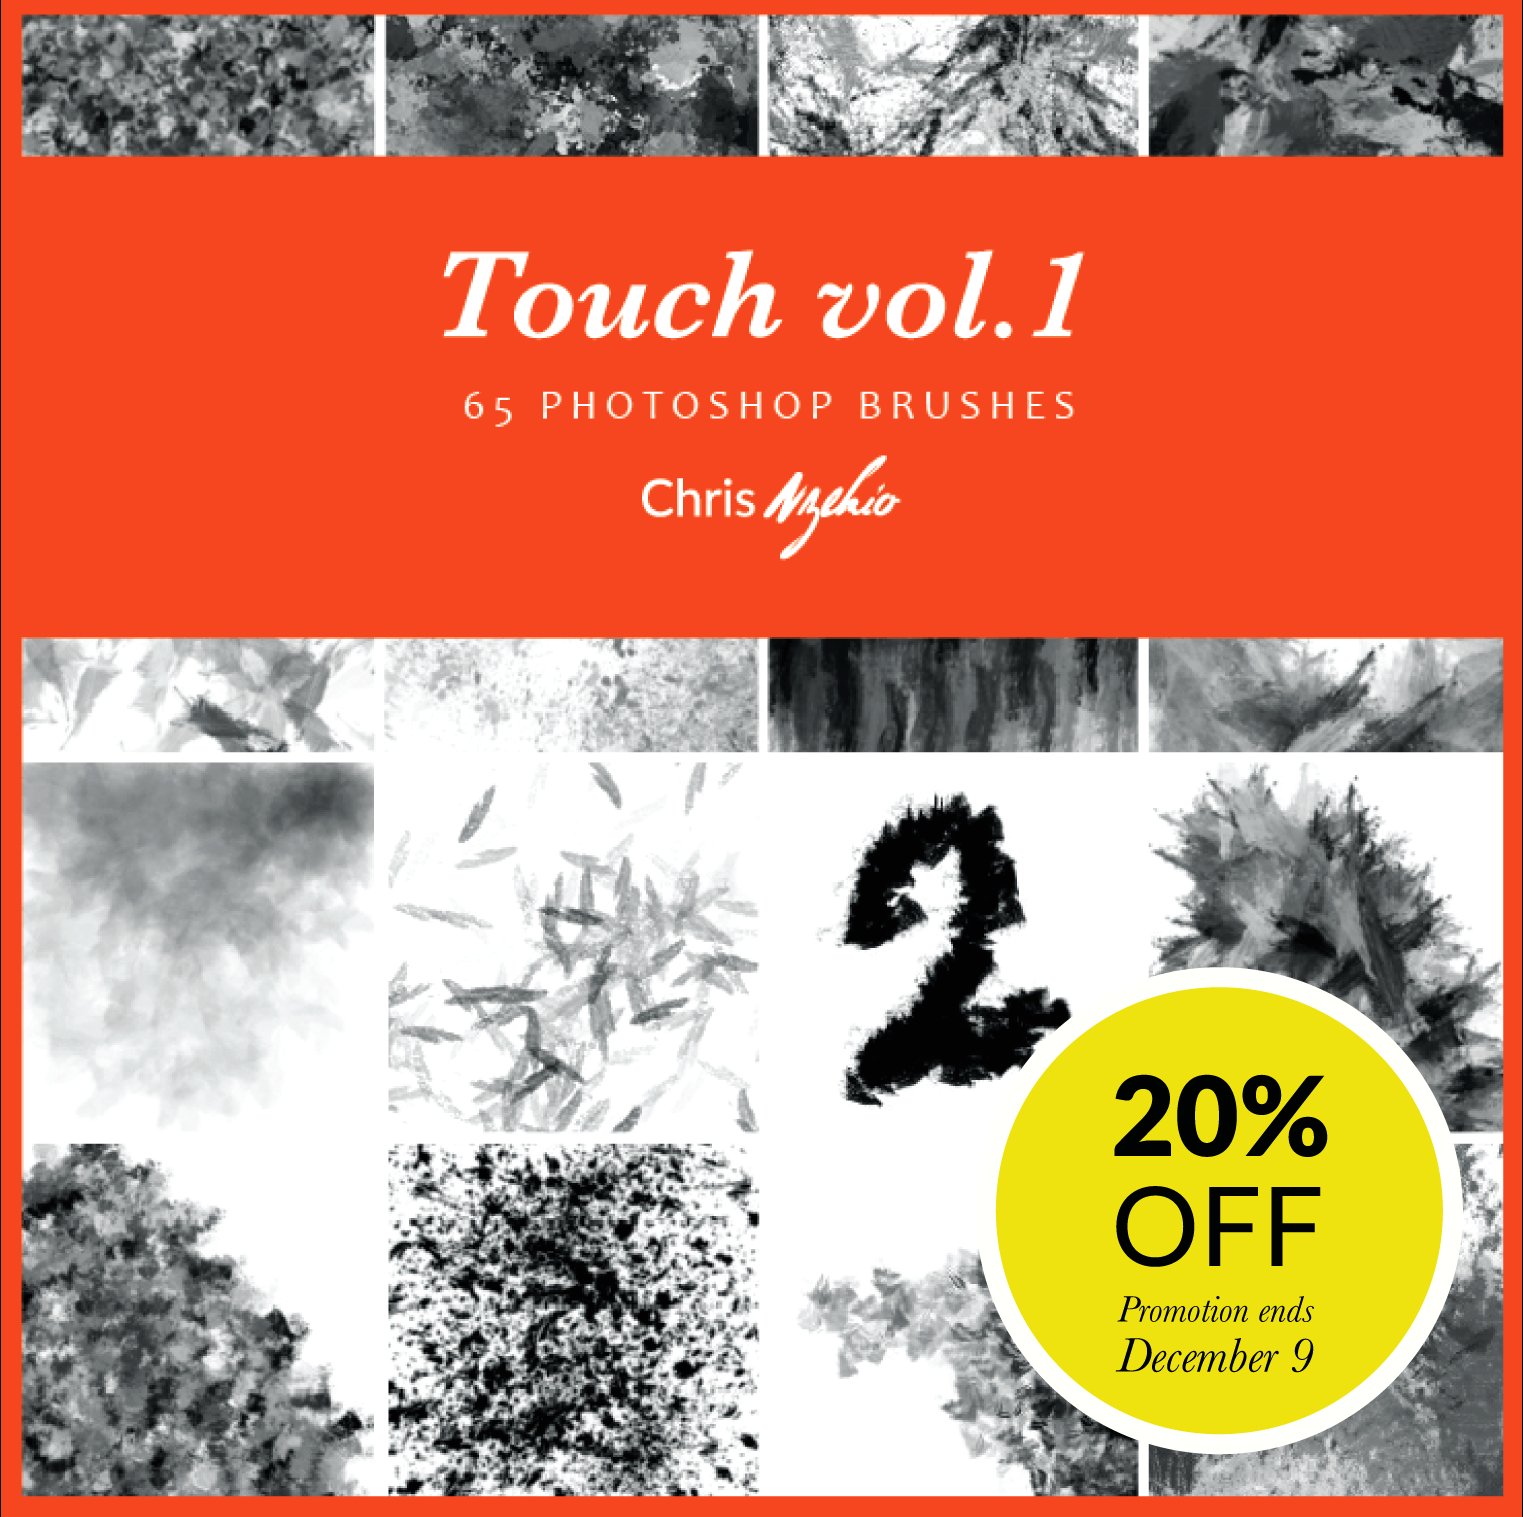 Chris Nzekio Touch vol.1cover image.